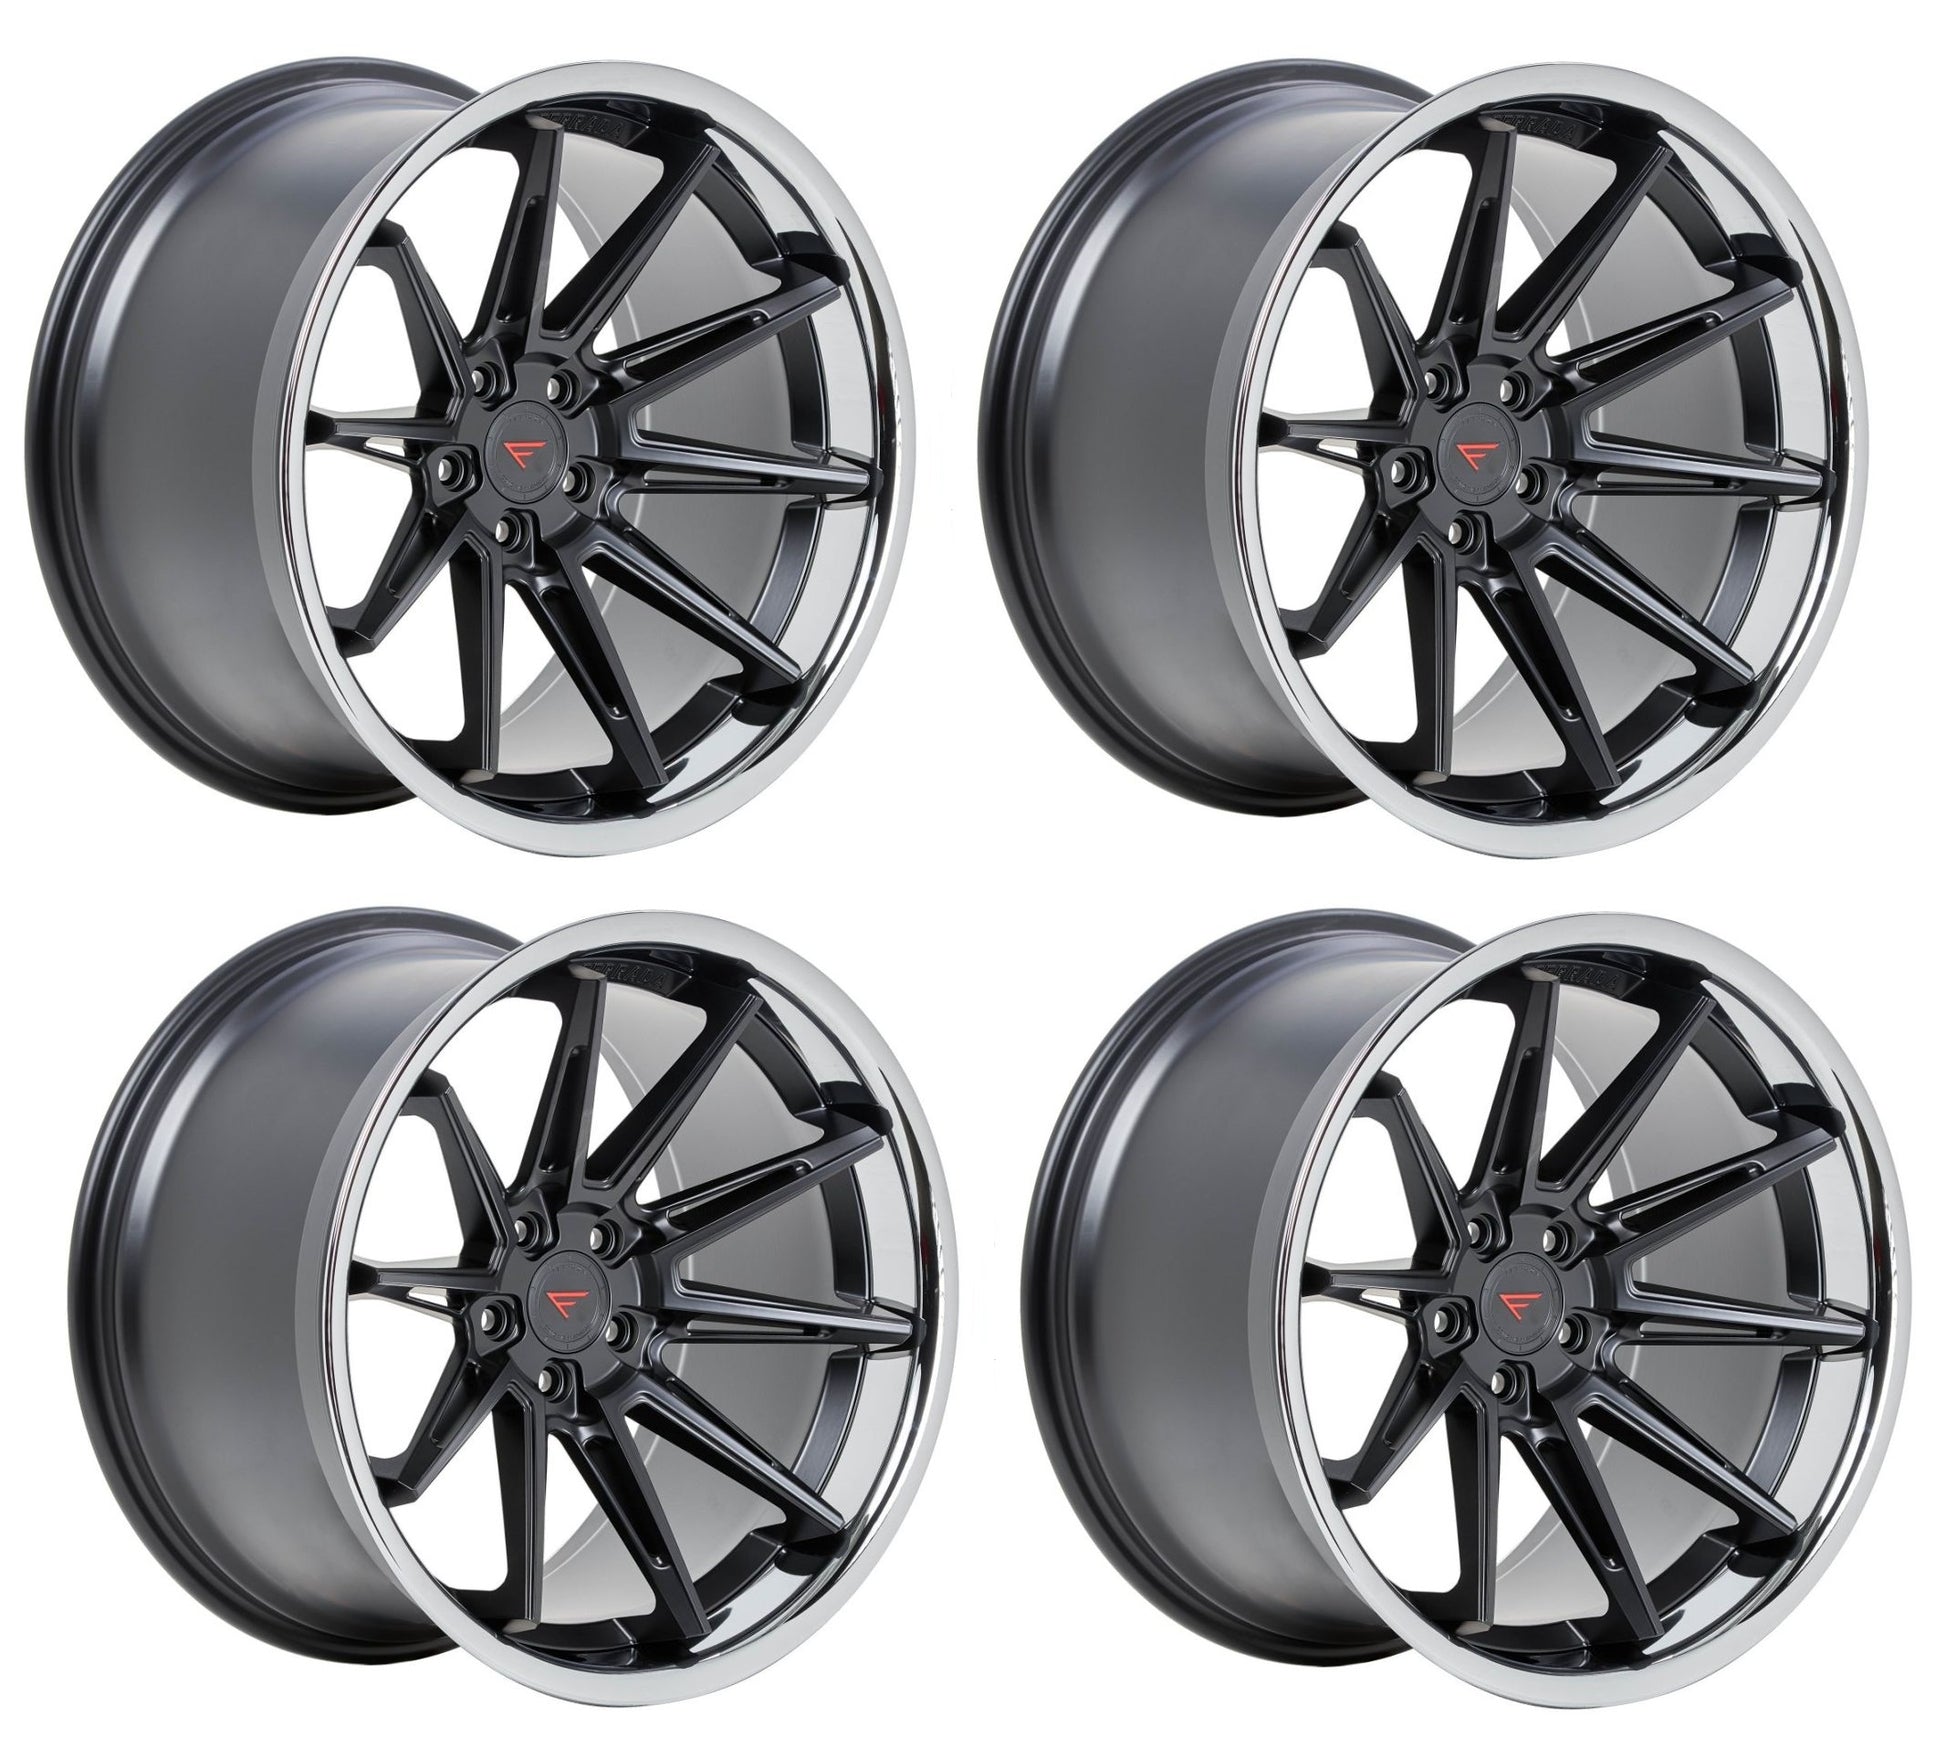 C8 Corvette Wheels: Ferrada CM2 - Matte Black w/ Chrome Lip (Set)